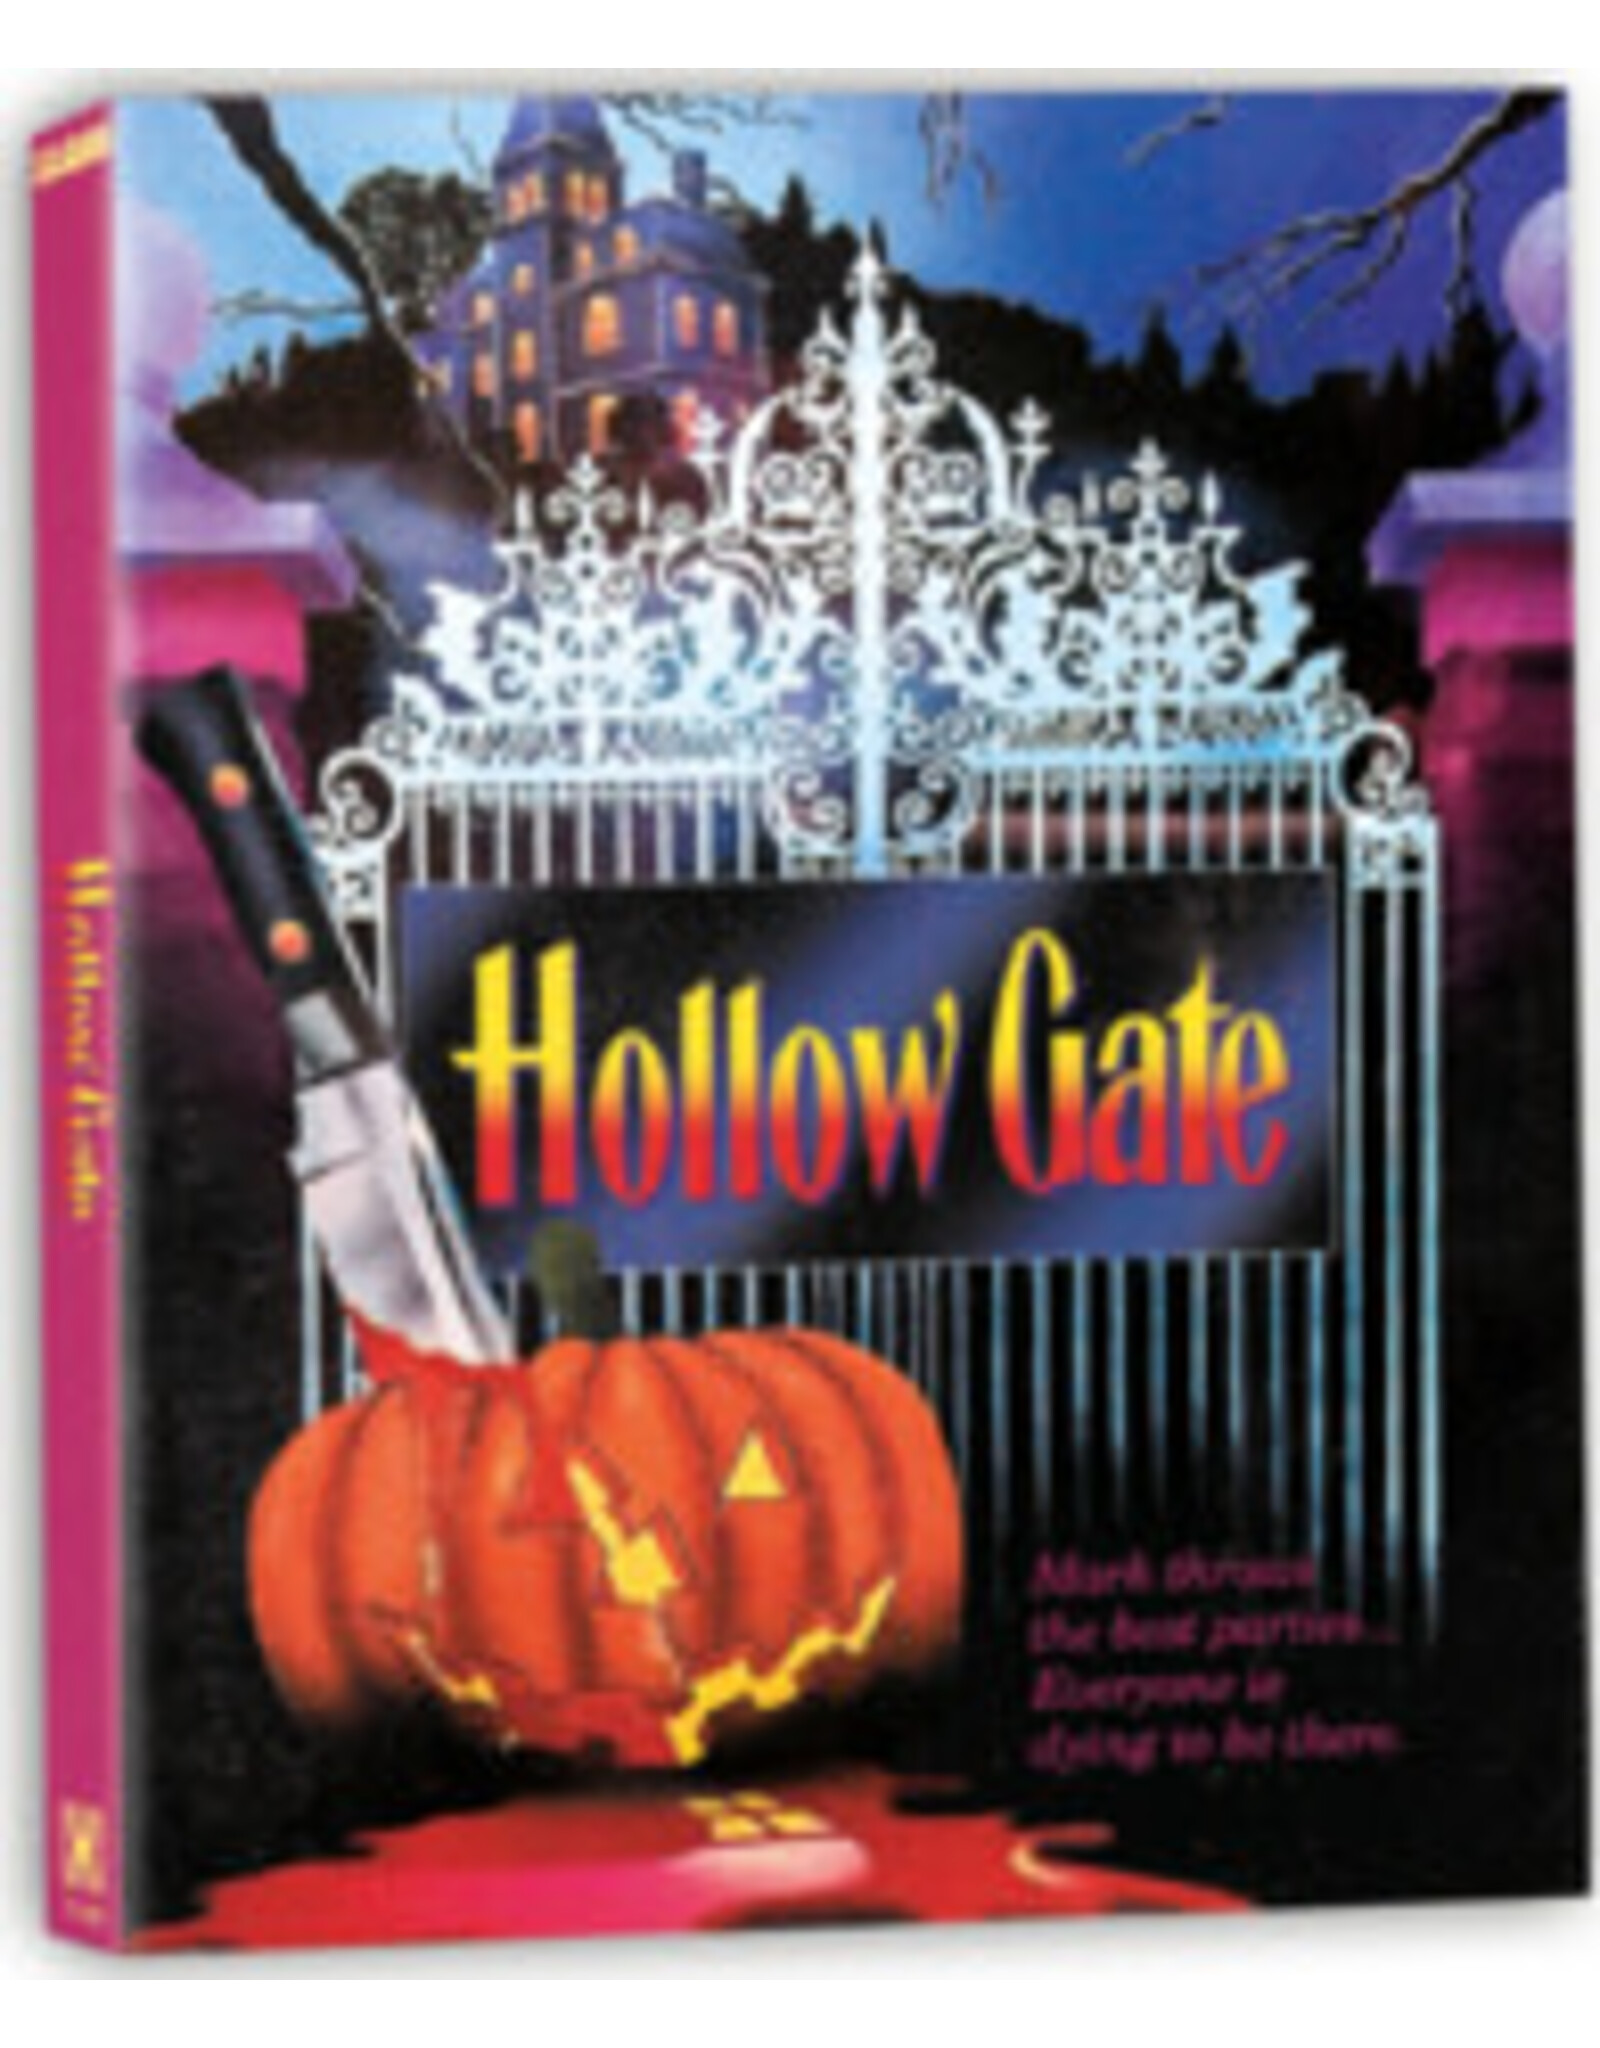 Horror Hollow Gate - Terror Vision (Brand New w/ Slipcover)